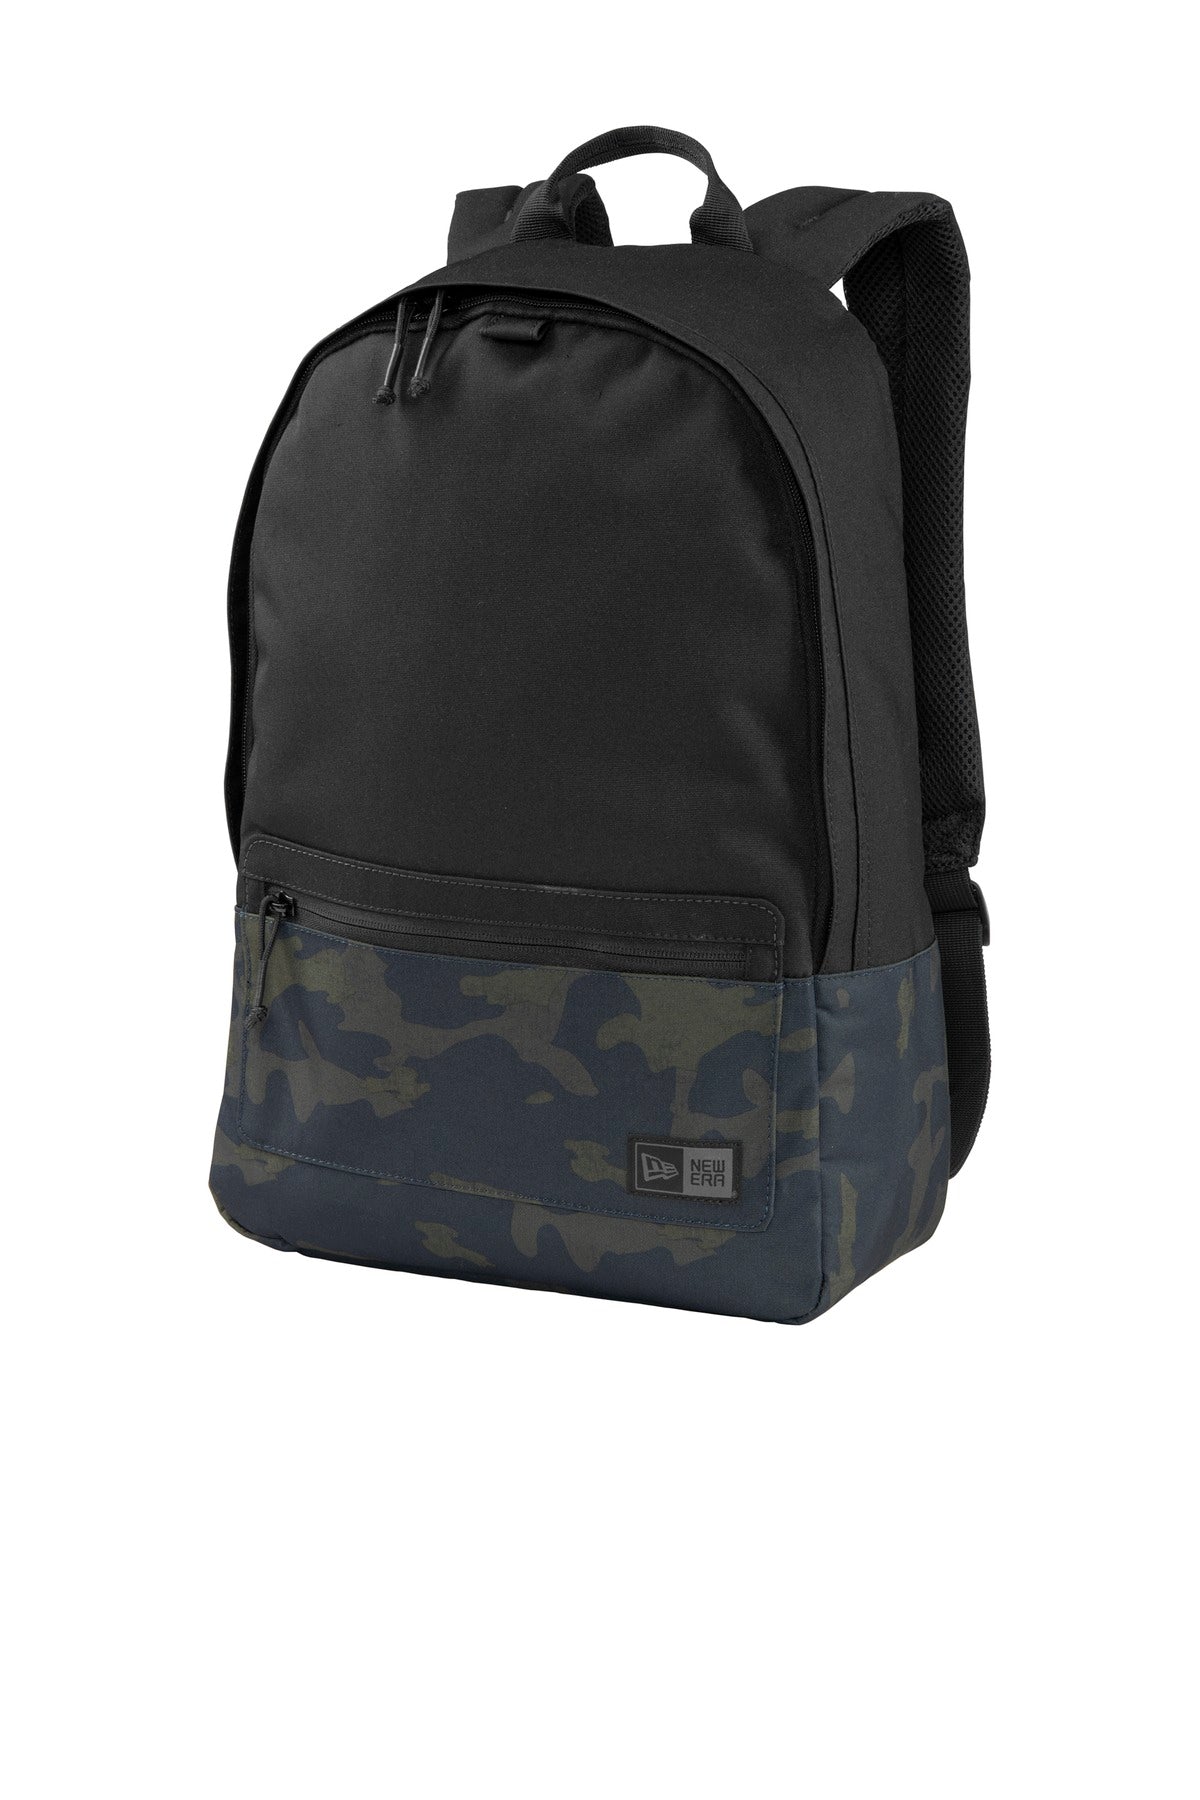 Photo of New Era Bags NEB201  color  Black/ Mythic Camo